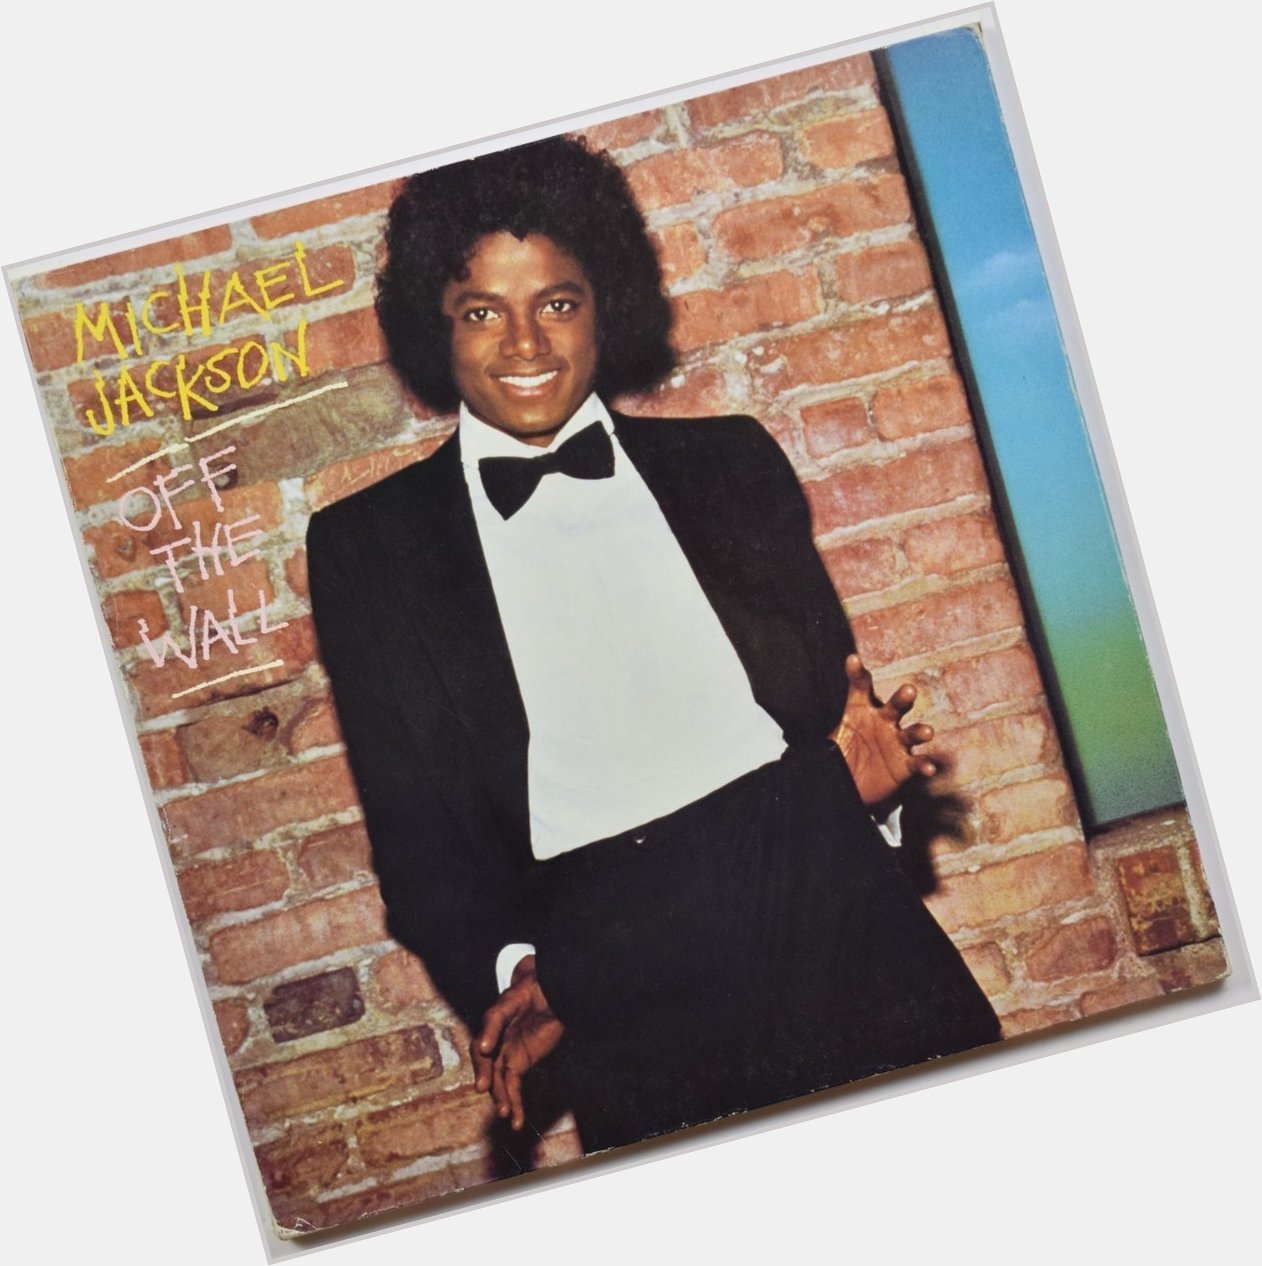 Happy 40th birthday to Michael Jackson\s classic album Off The Wall 